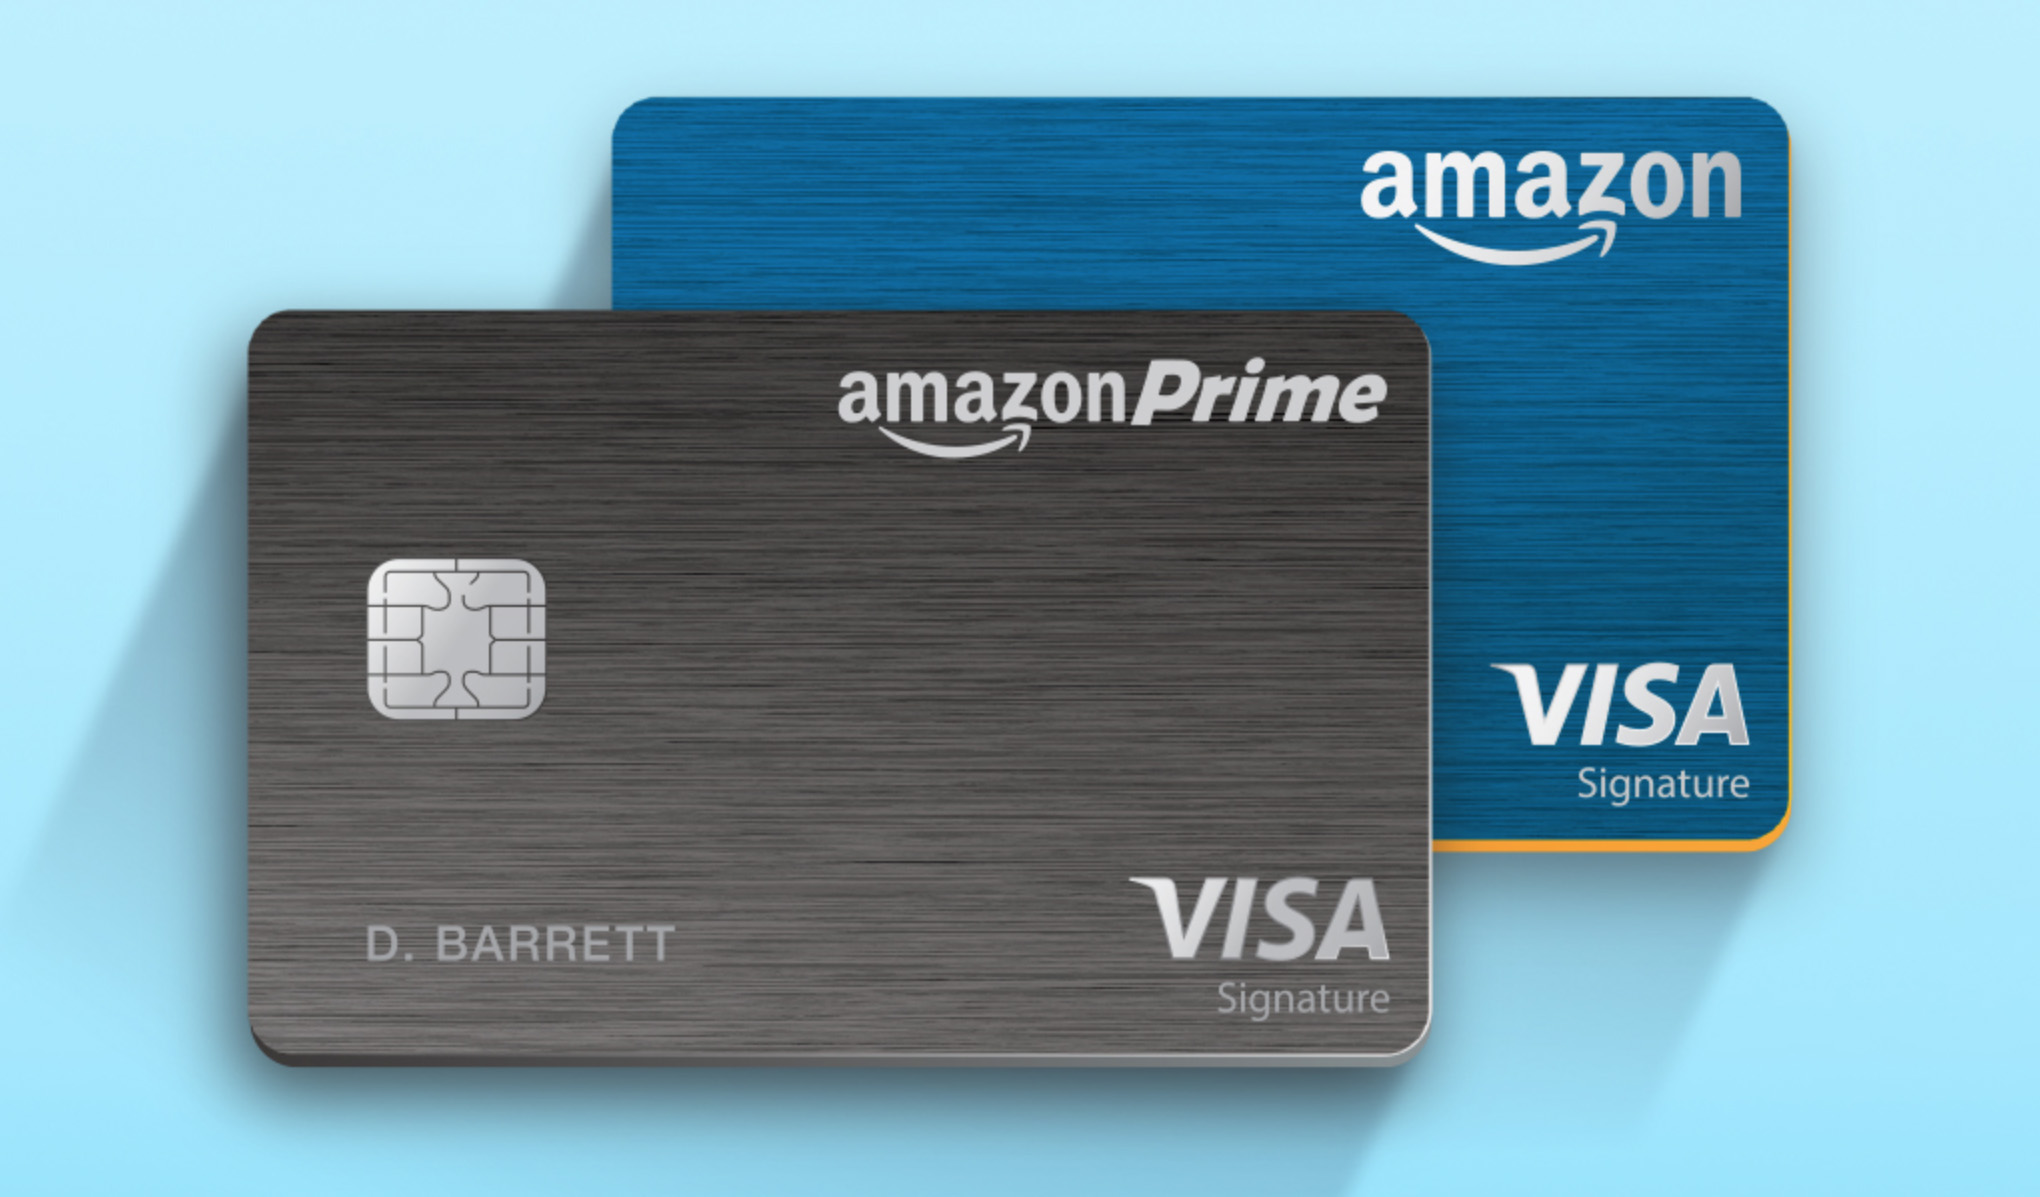 Amazon Prime Rewards Visa Card Offers 5 Cash Back 9to5Toys